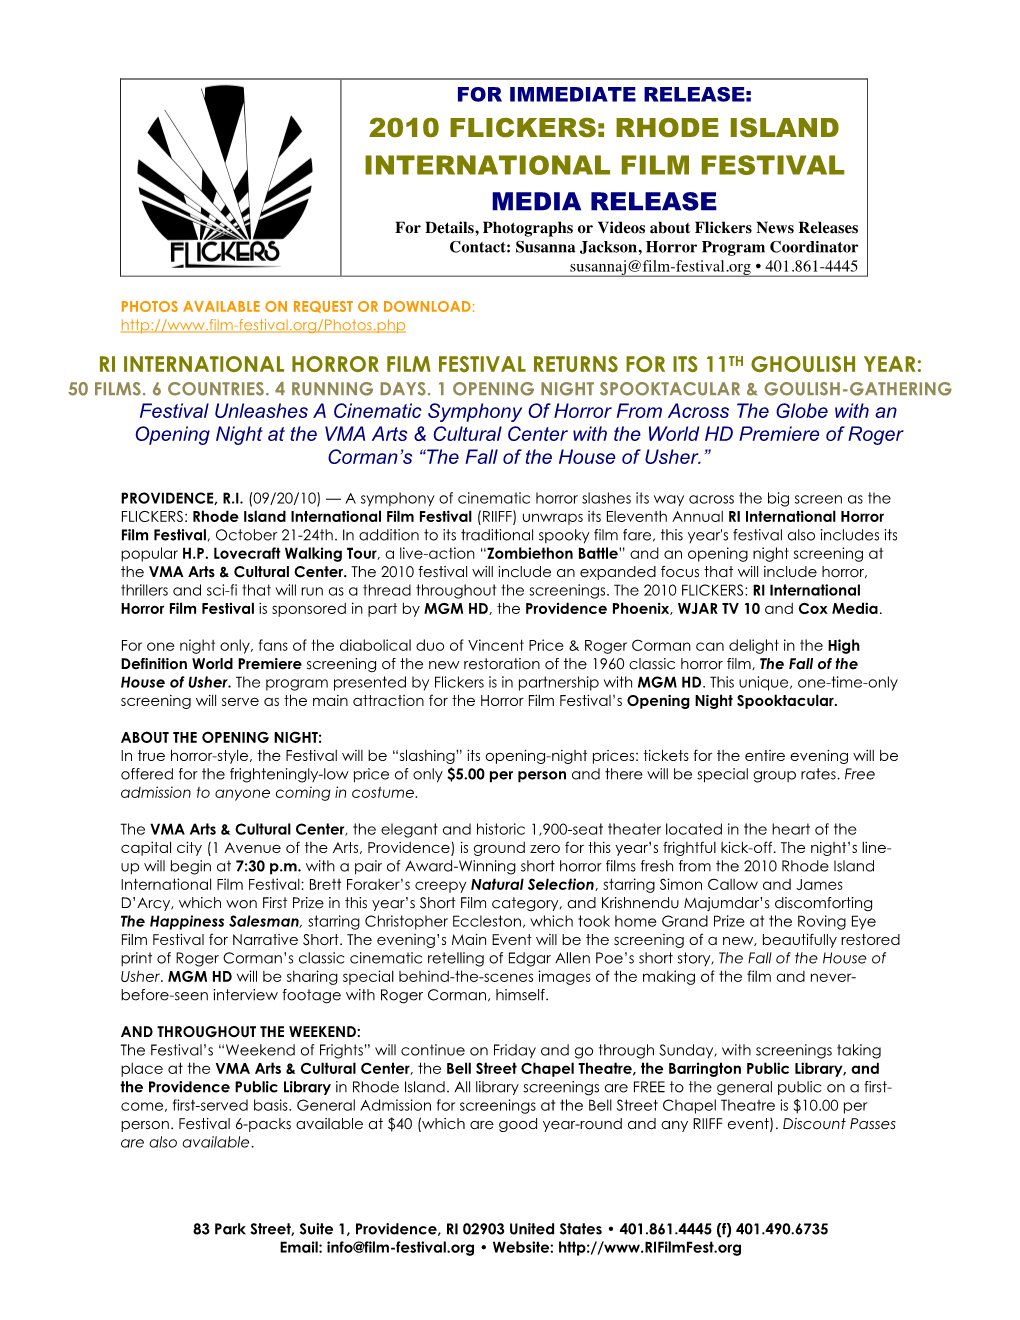 11Th ANNUAL RI INTERNATIONAL HORROR FILM FESTIVAL